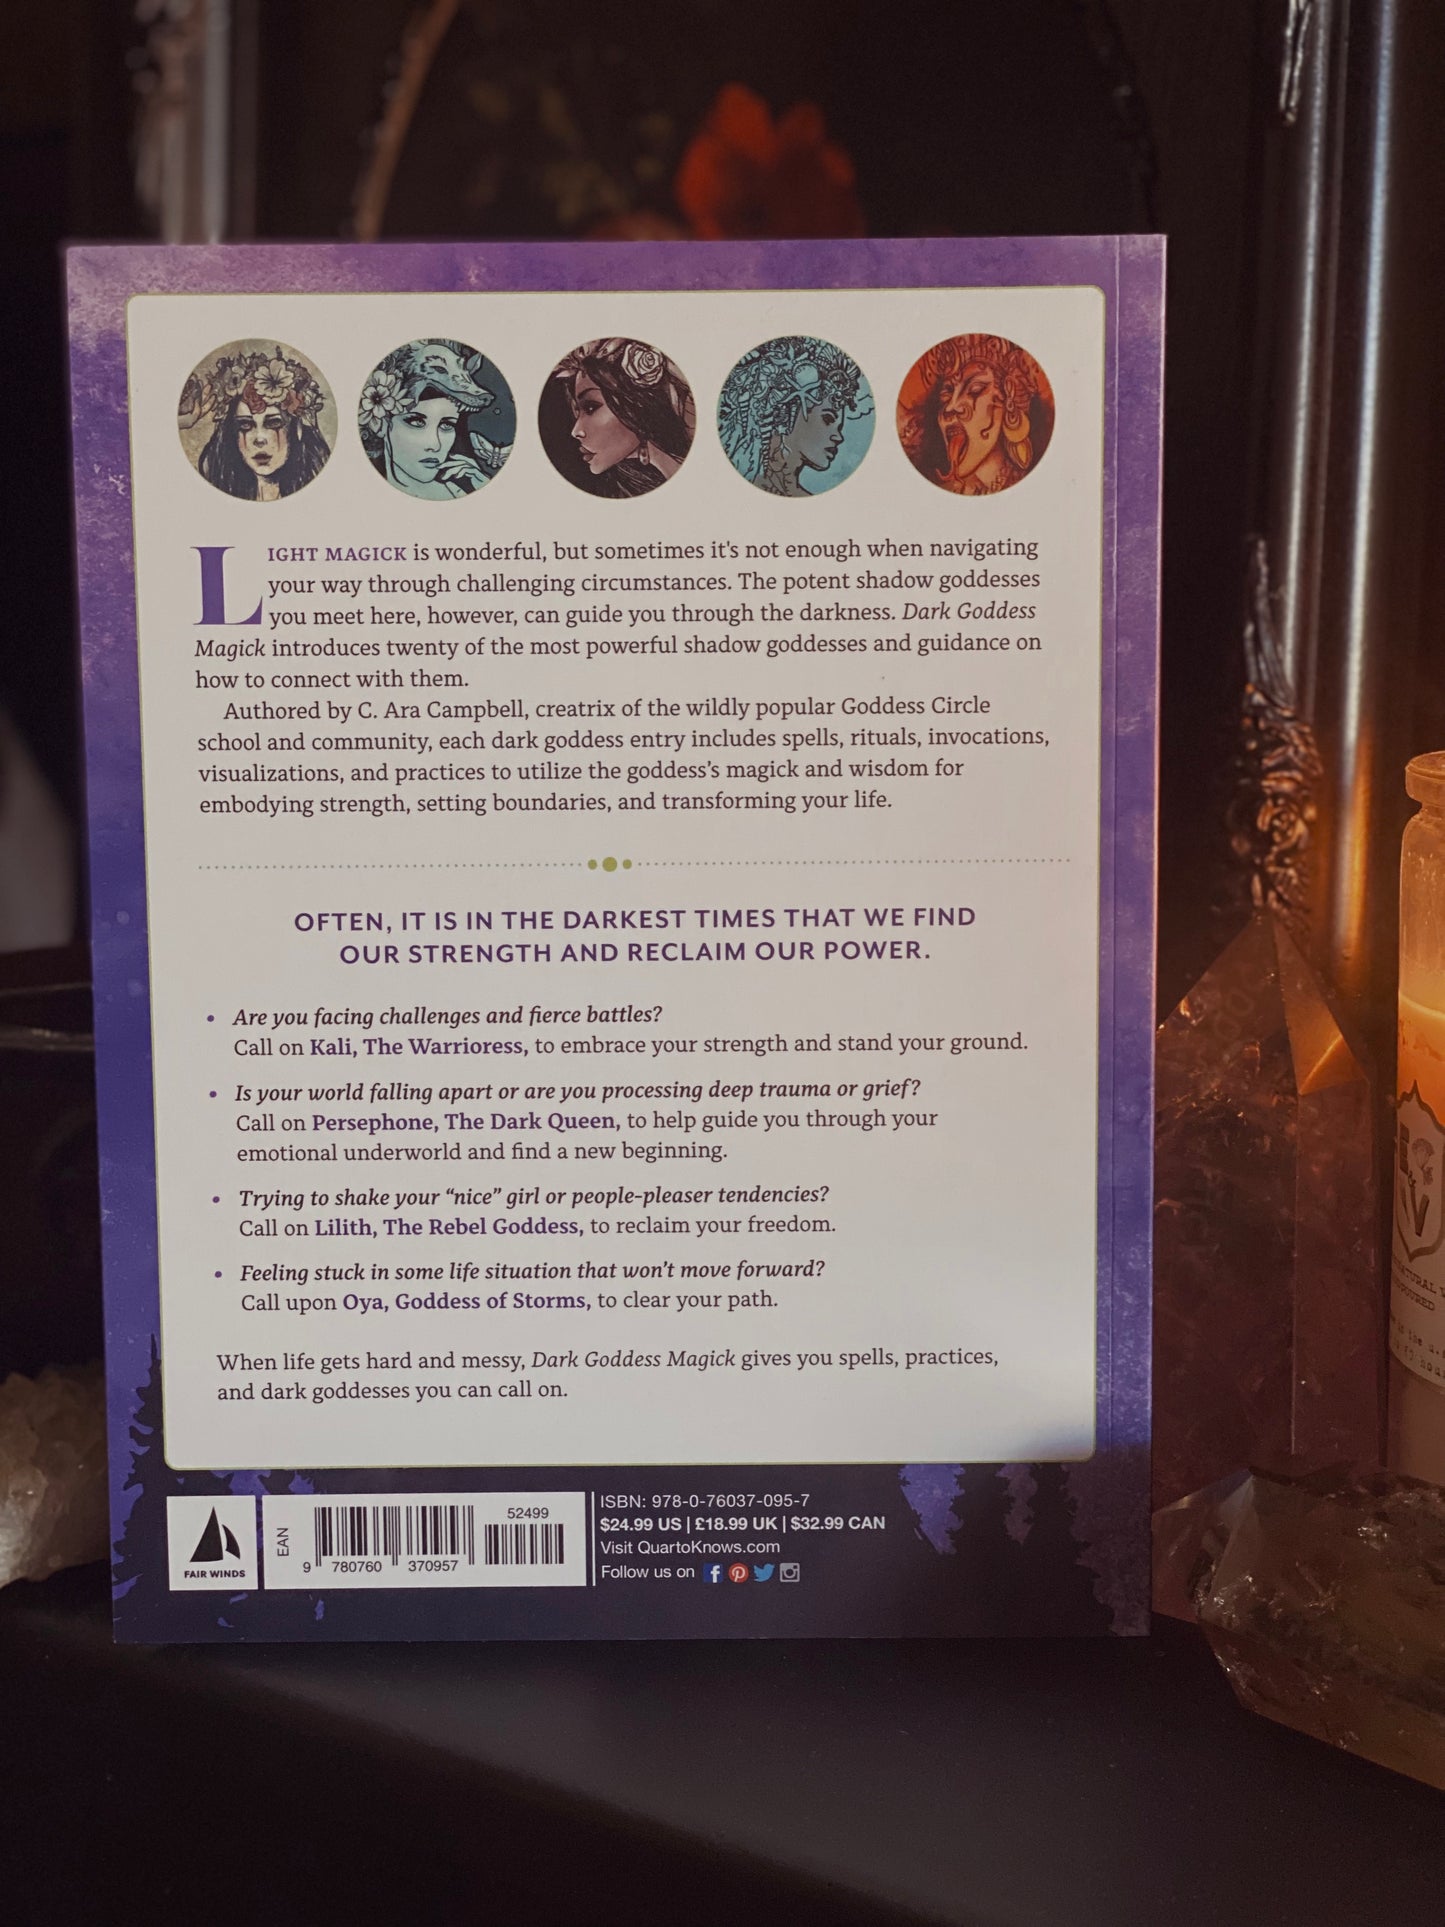 Dark Goddess Magick: Rituals and spells for reclaiming your feminine fire